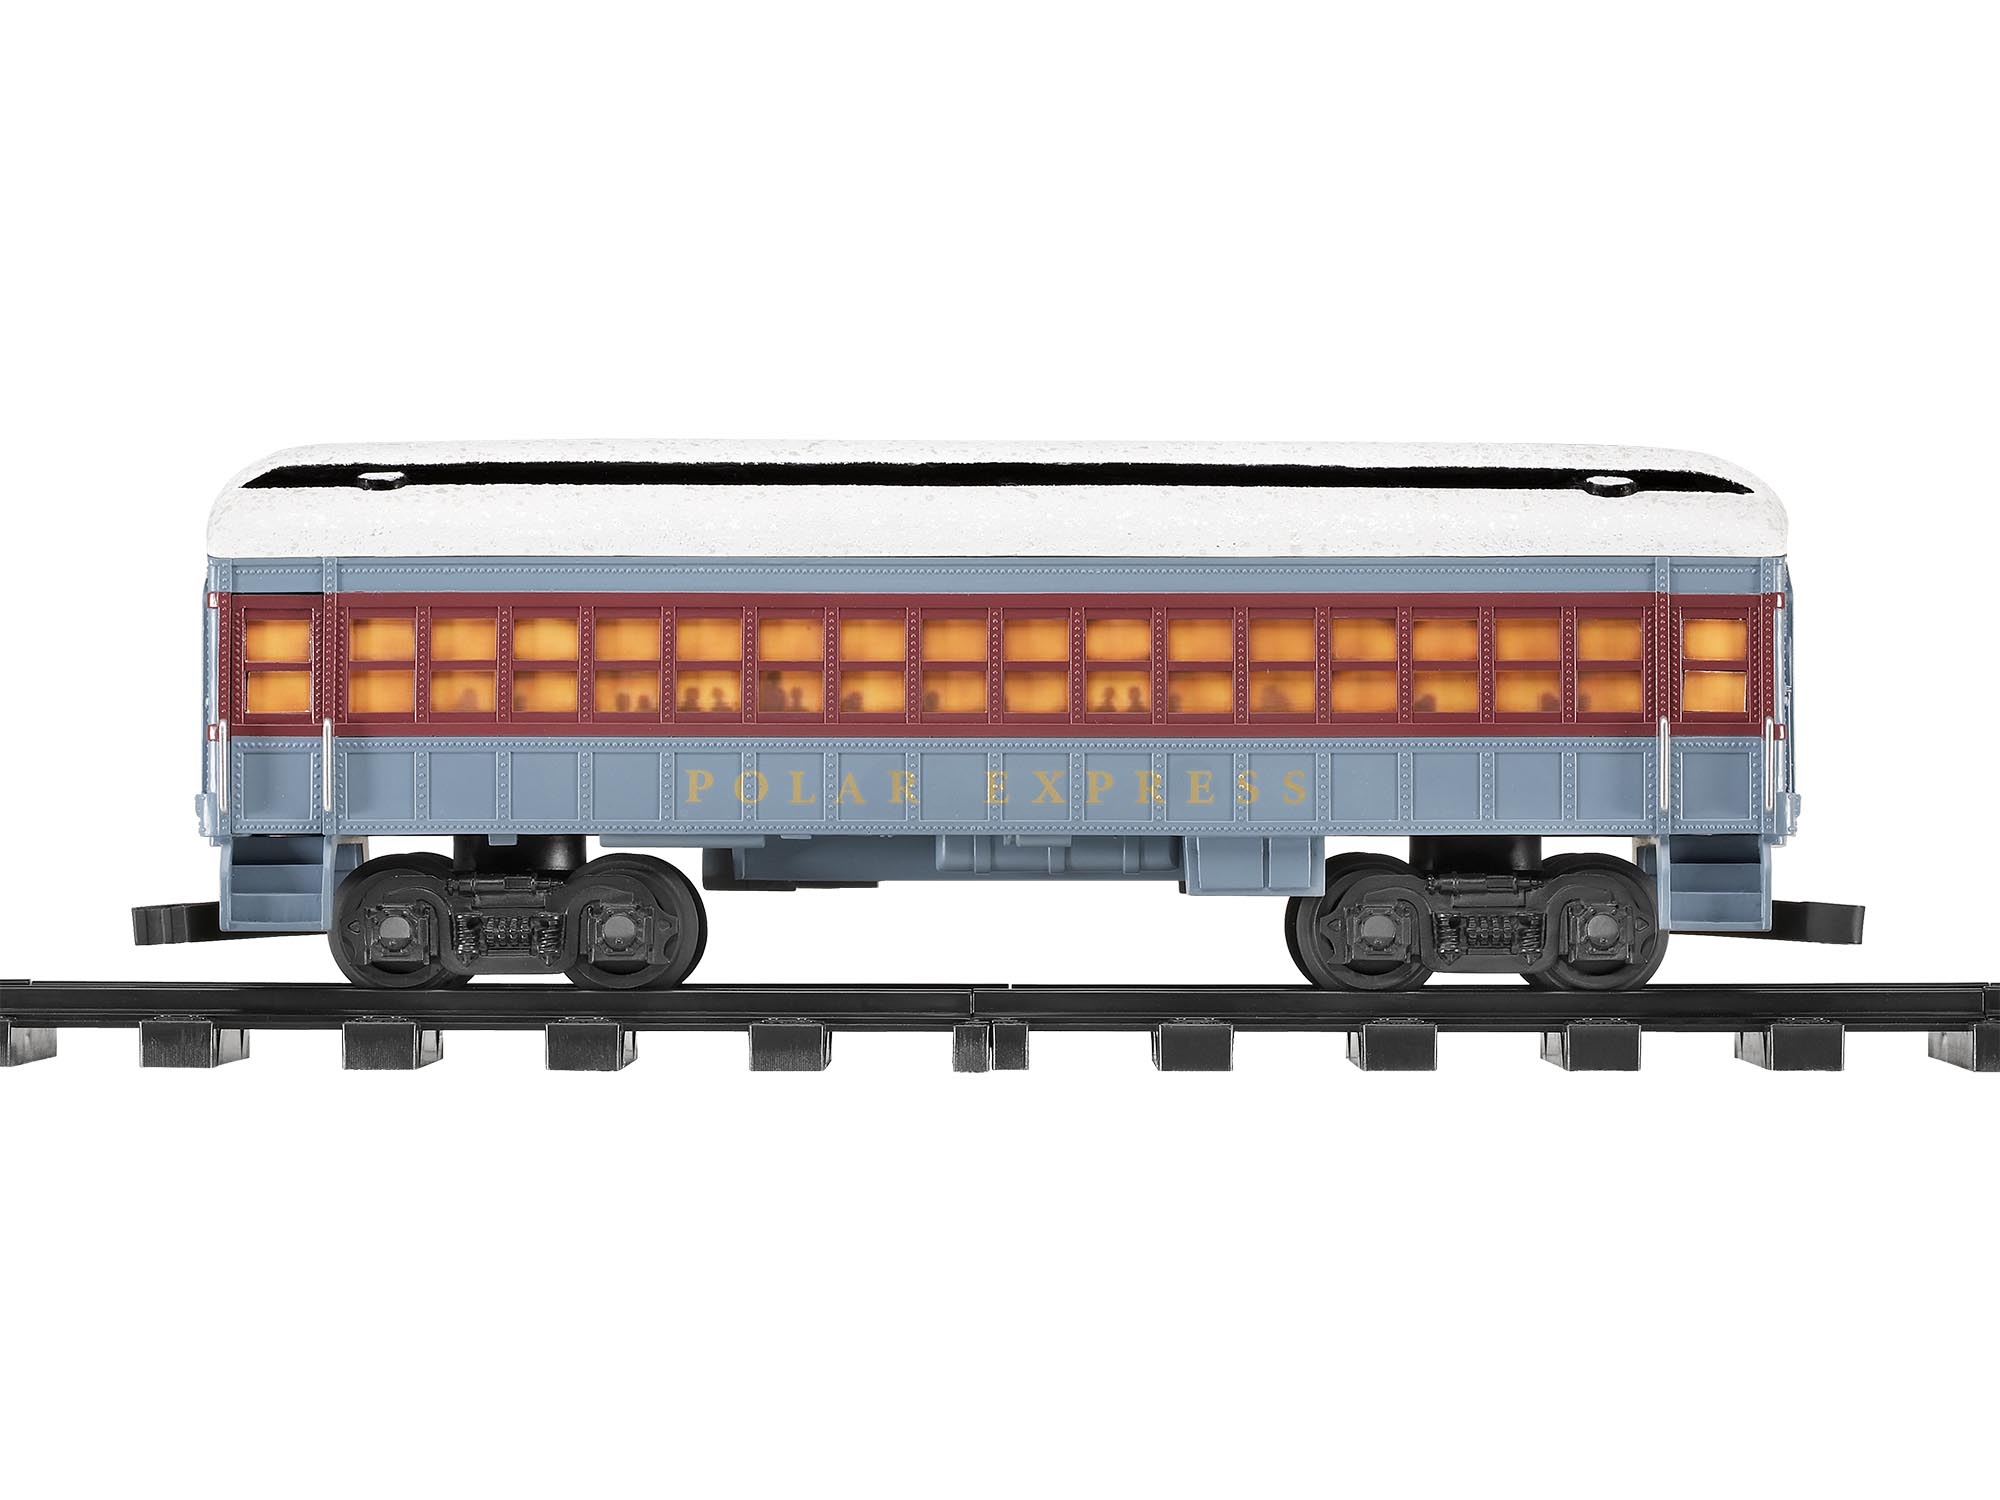 Lionel Polar Express G Gauge Train Tracks 7-11022 16 Pcs 12 Curved 4 Straight for sale online 